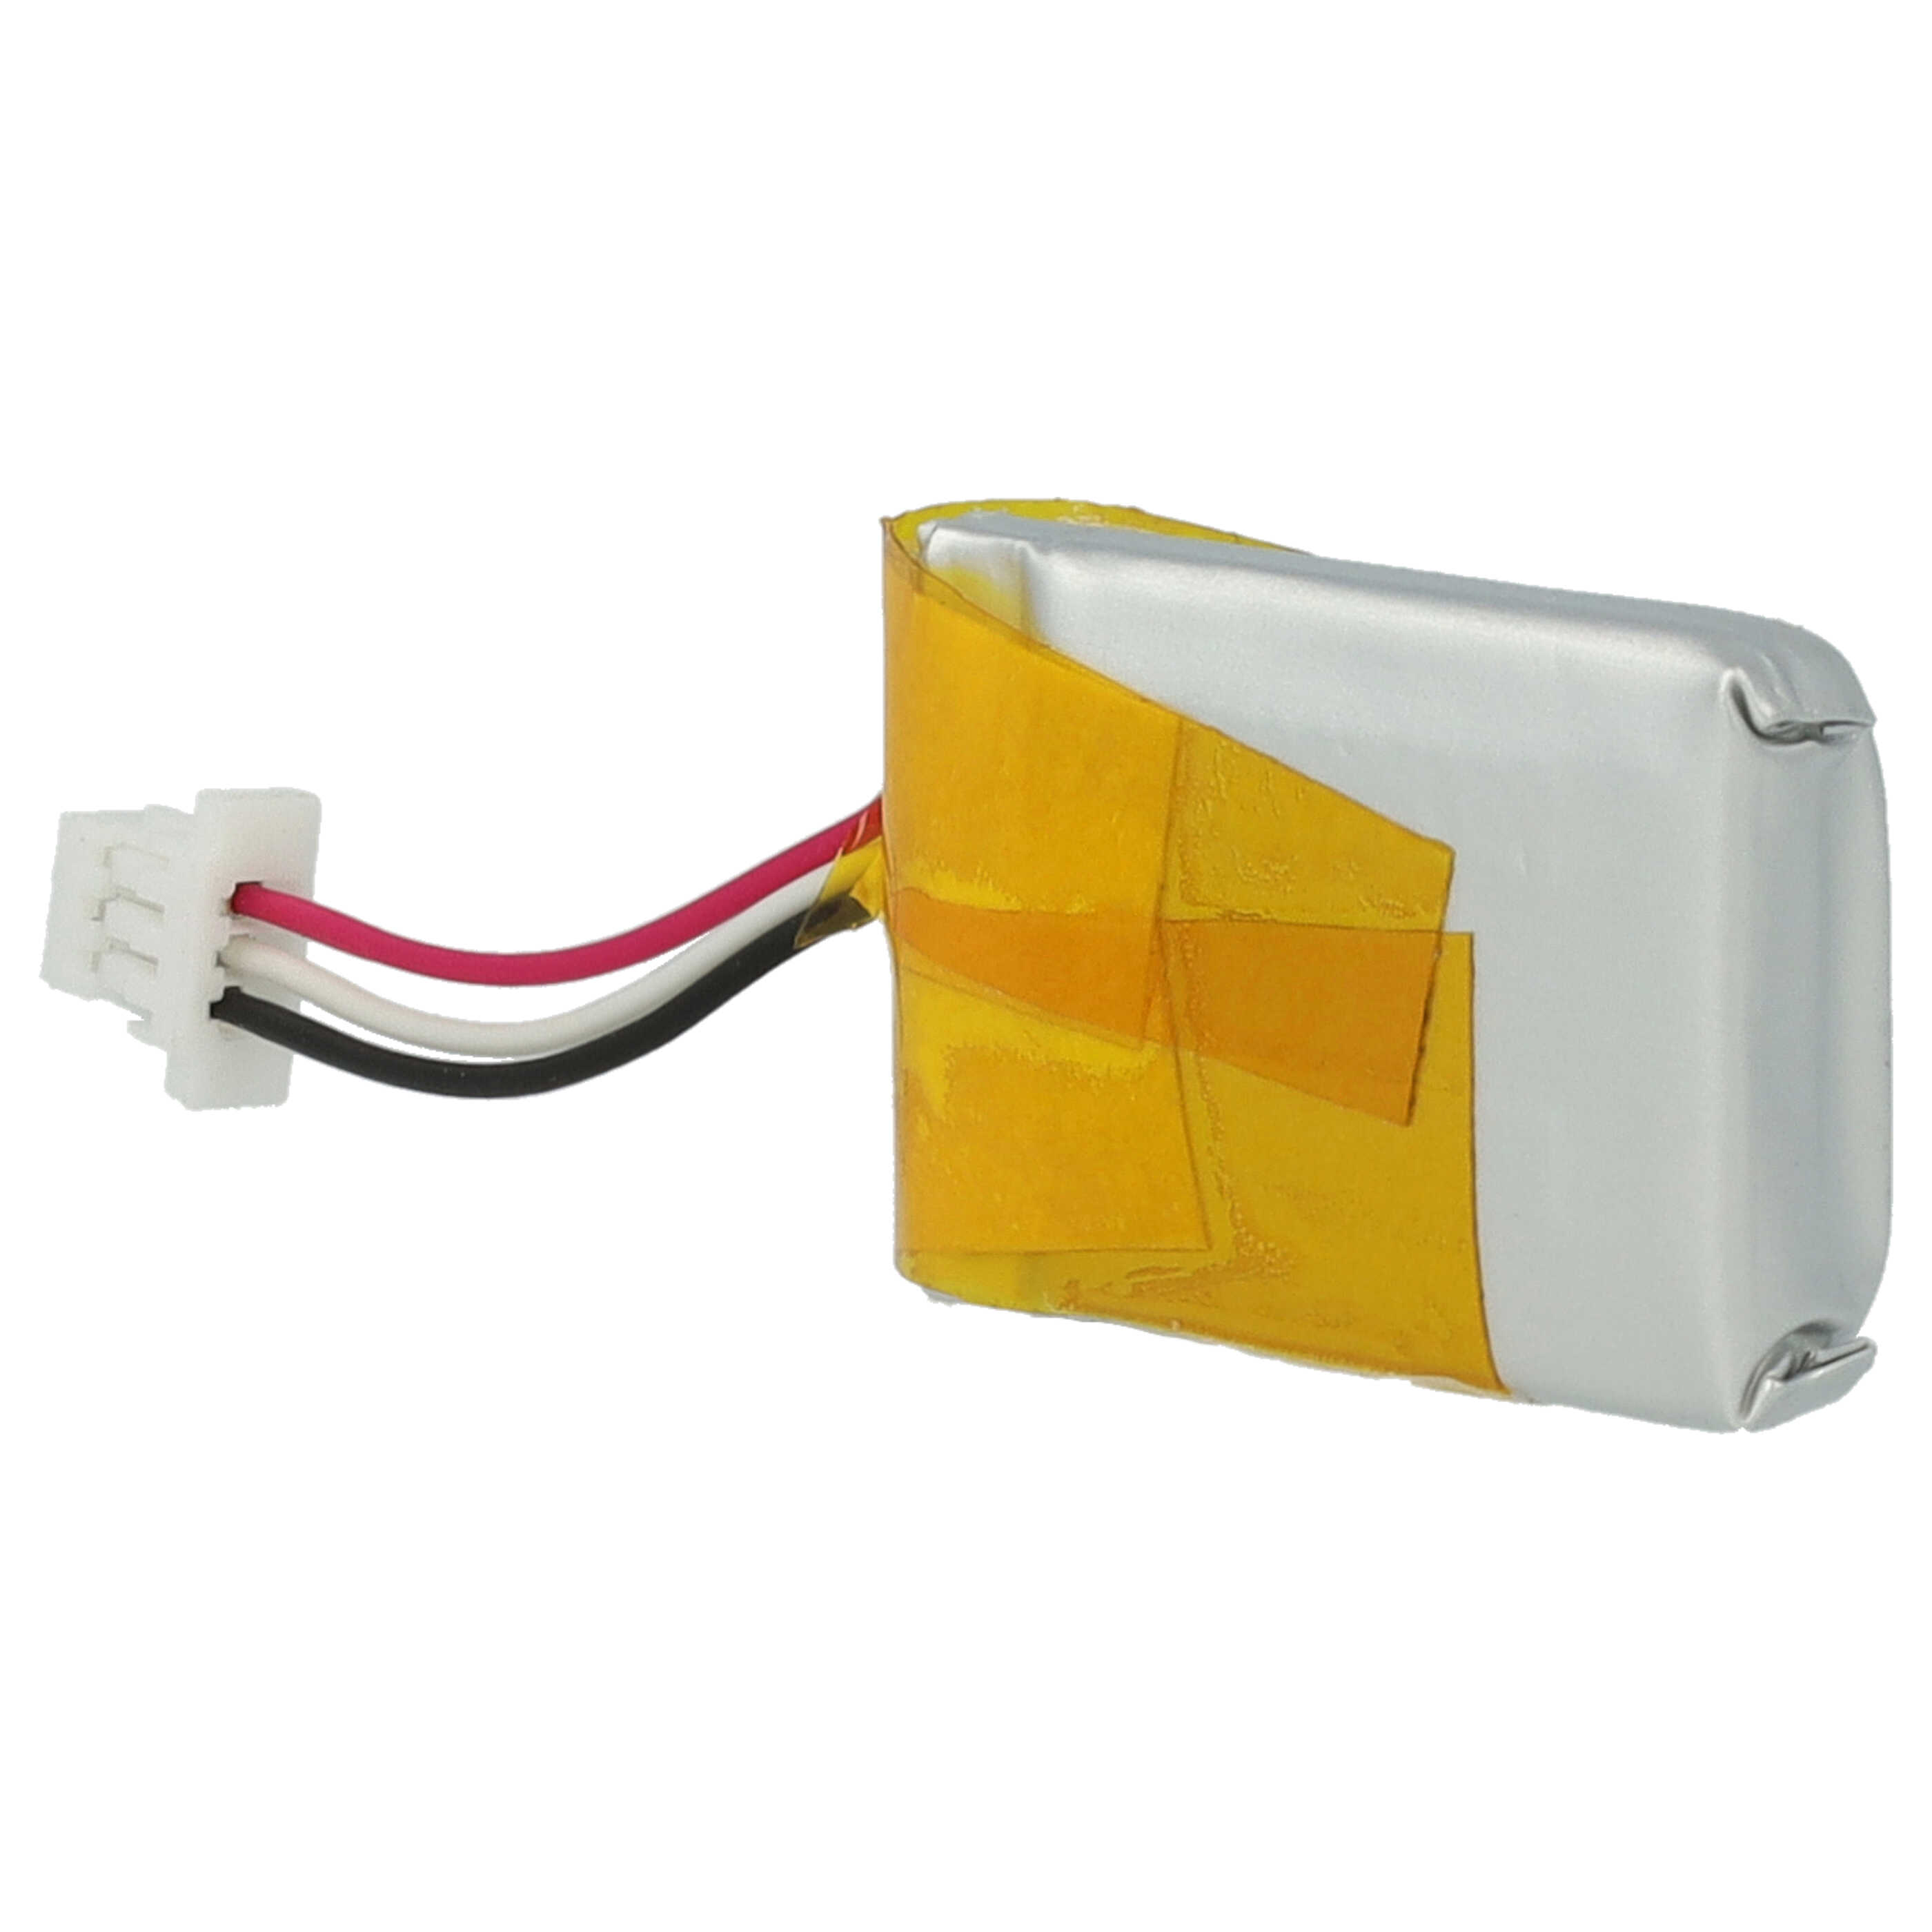 Batteria per auricolari cuffie wireless sostituisce Plantronics 212367-01 - 140mAh, 3,7V Li-Poly